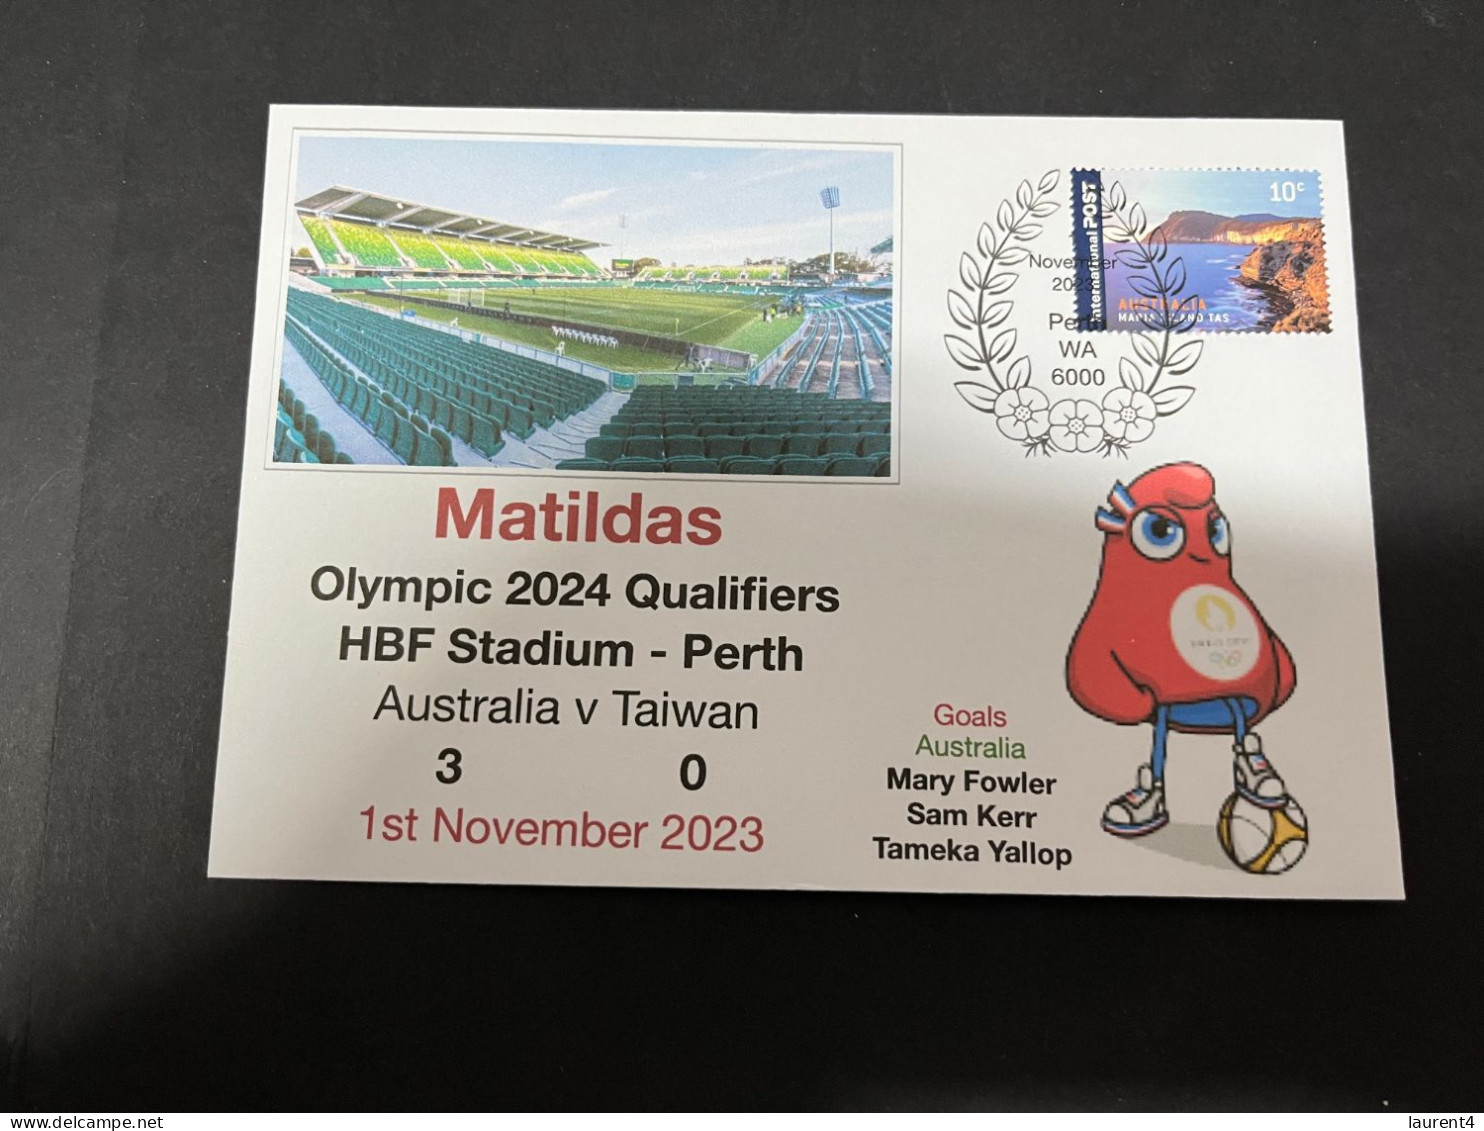 3-11-2023 (1 V 13) Australia (3) V Taiwan (0) - Matildas Olympic 2024 Qualifiers (match 3) 1-11-2023 In Perth - Eté 2024 : Paris